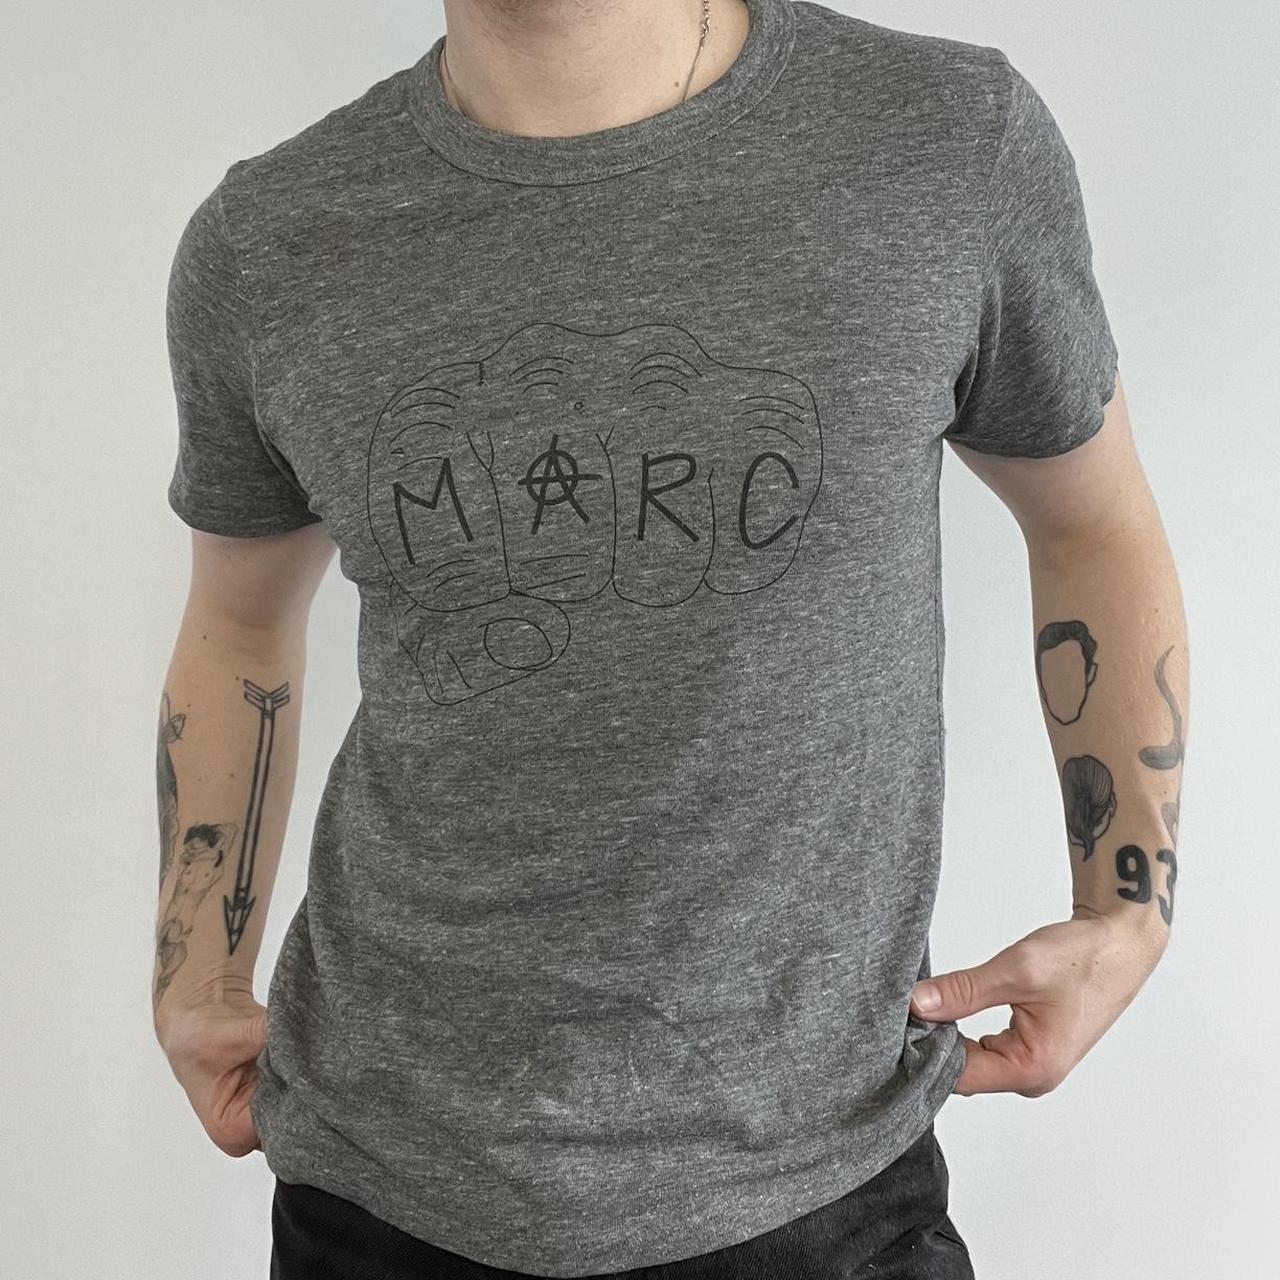 Marc by Marc Jacobs Men's Grey T-shirt